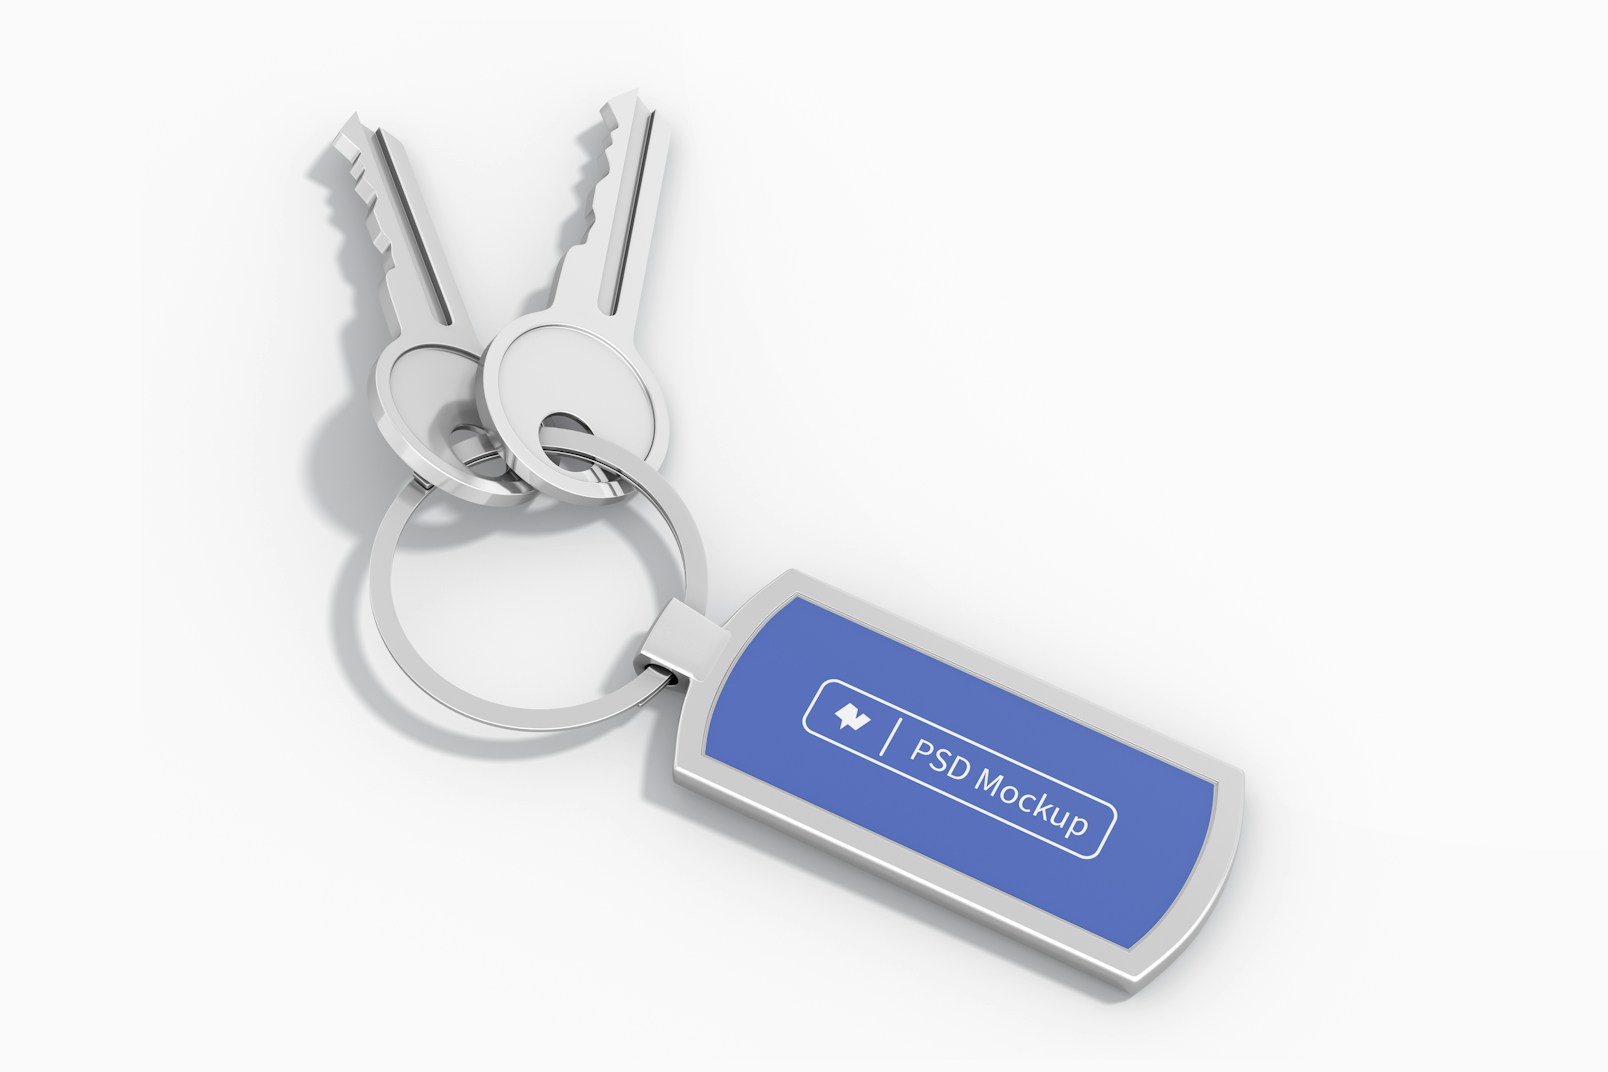 Metallic Keychain with Keys Mockup